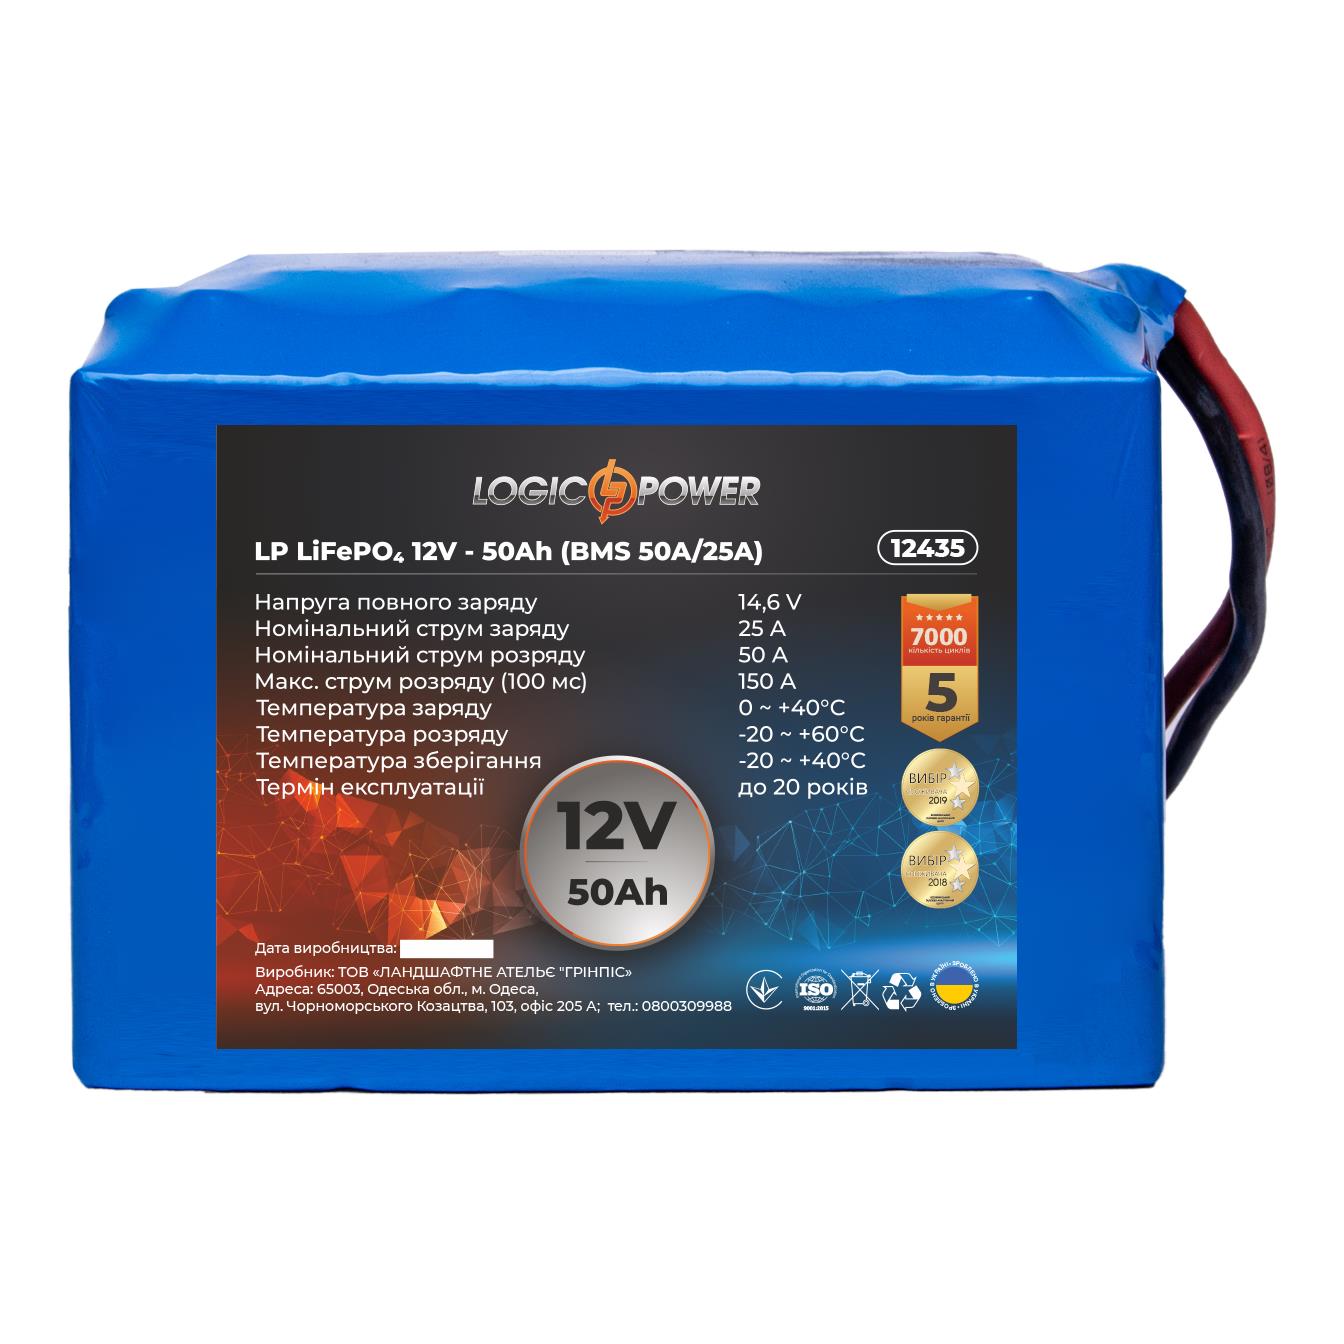 Акумулятор літій-залізо-фосфатний LogicPower LP LiFePO4 12V - 50 Ah (BMS 50A/25А) (12435)